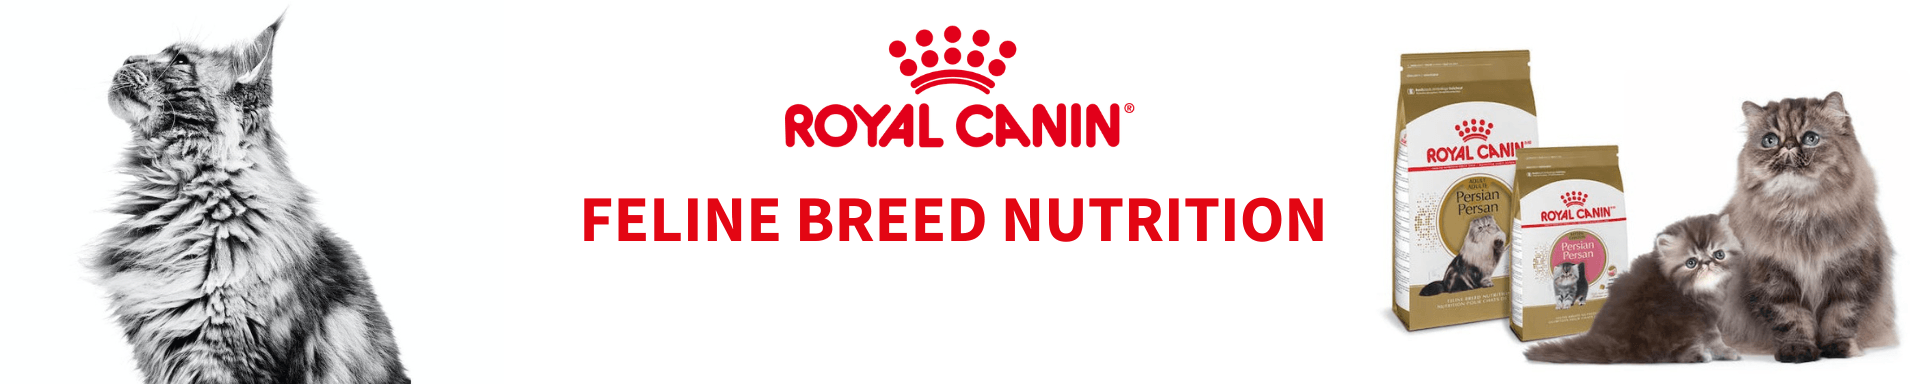 Royal Canin Feline Breed Nutrition - The Pets Club